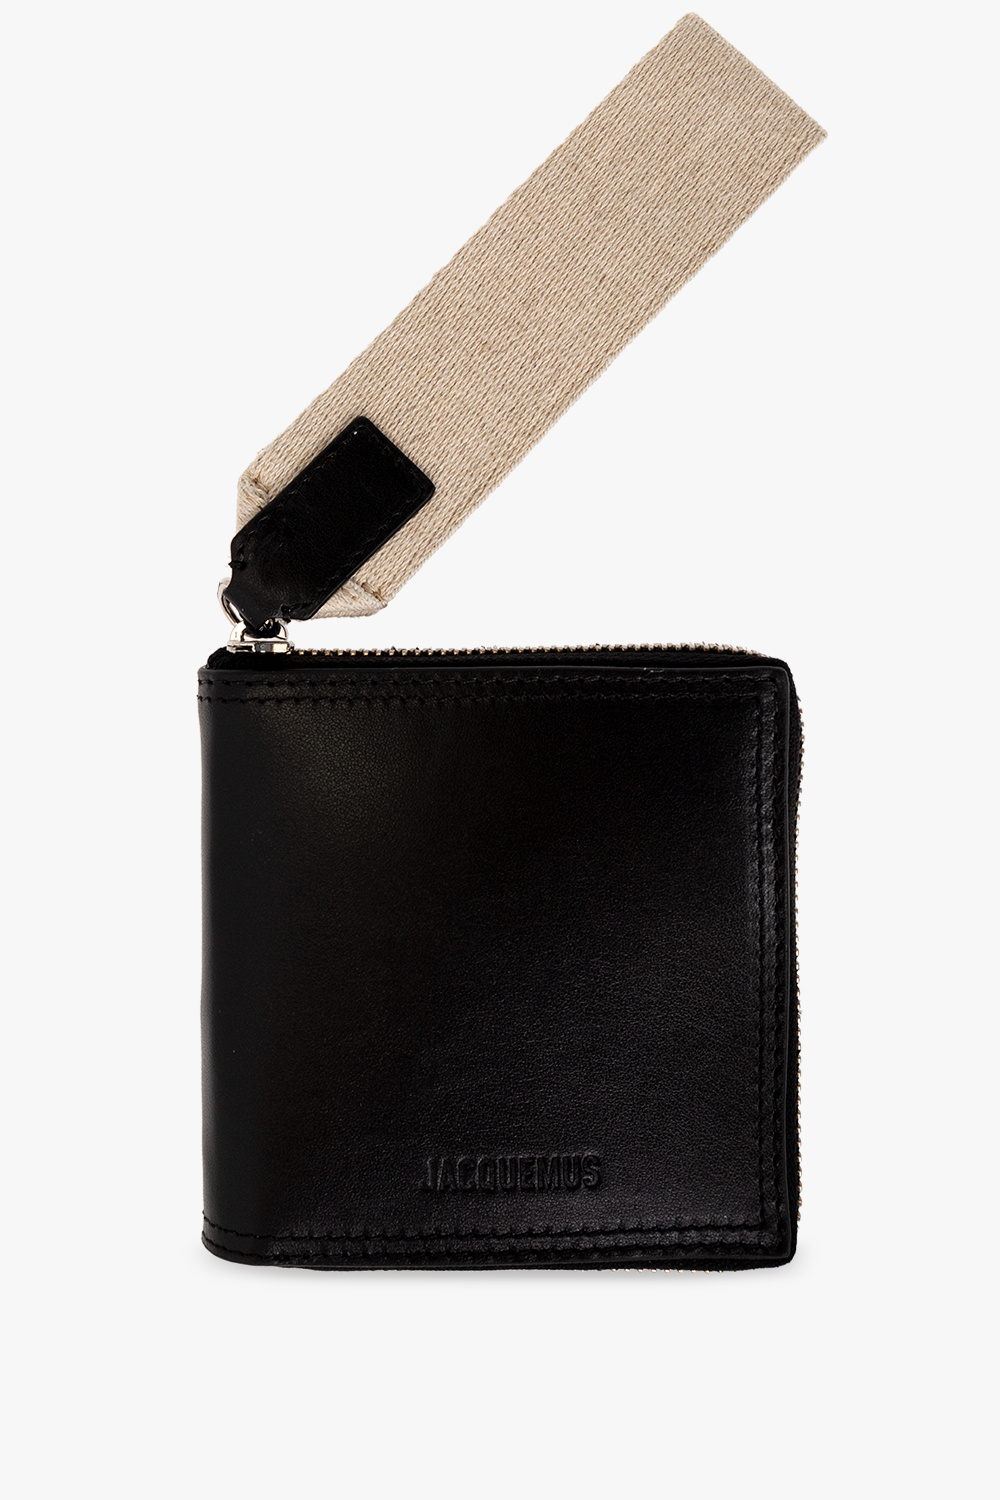 Jacquemus ‘Le Carre Rond’ leather wallet